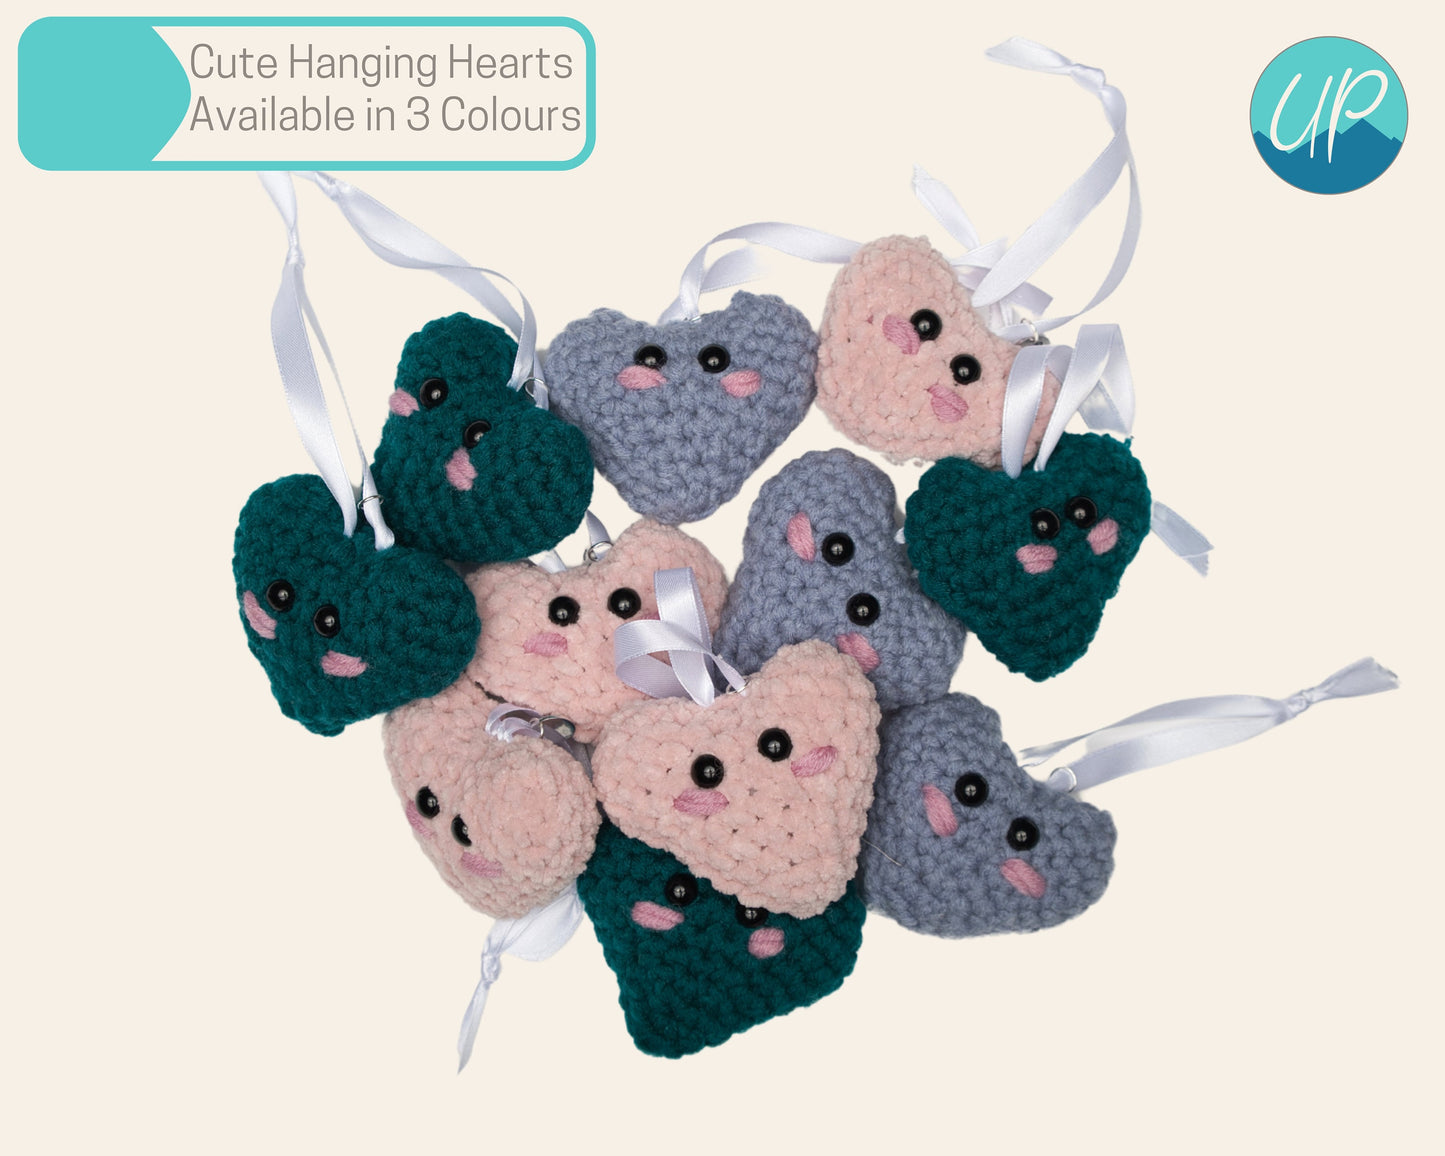 Cute Crochet Hanging Heart, Handmade Kawaii Home Decor Gift, Door Hanger, Self Care Inspirational Quotes, Pocket Hug for Friends, Self Love